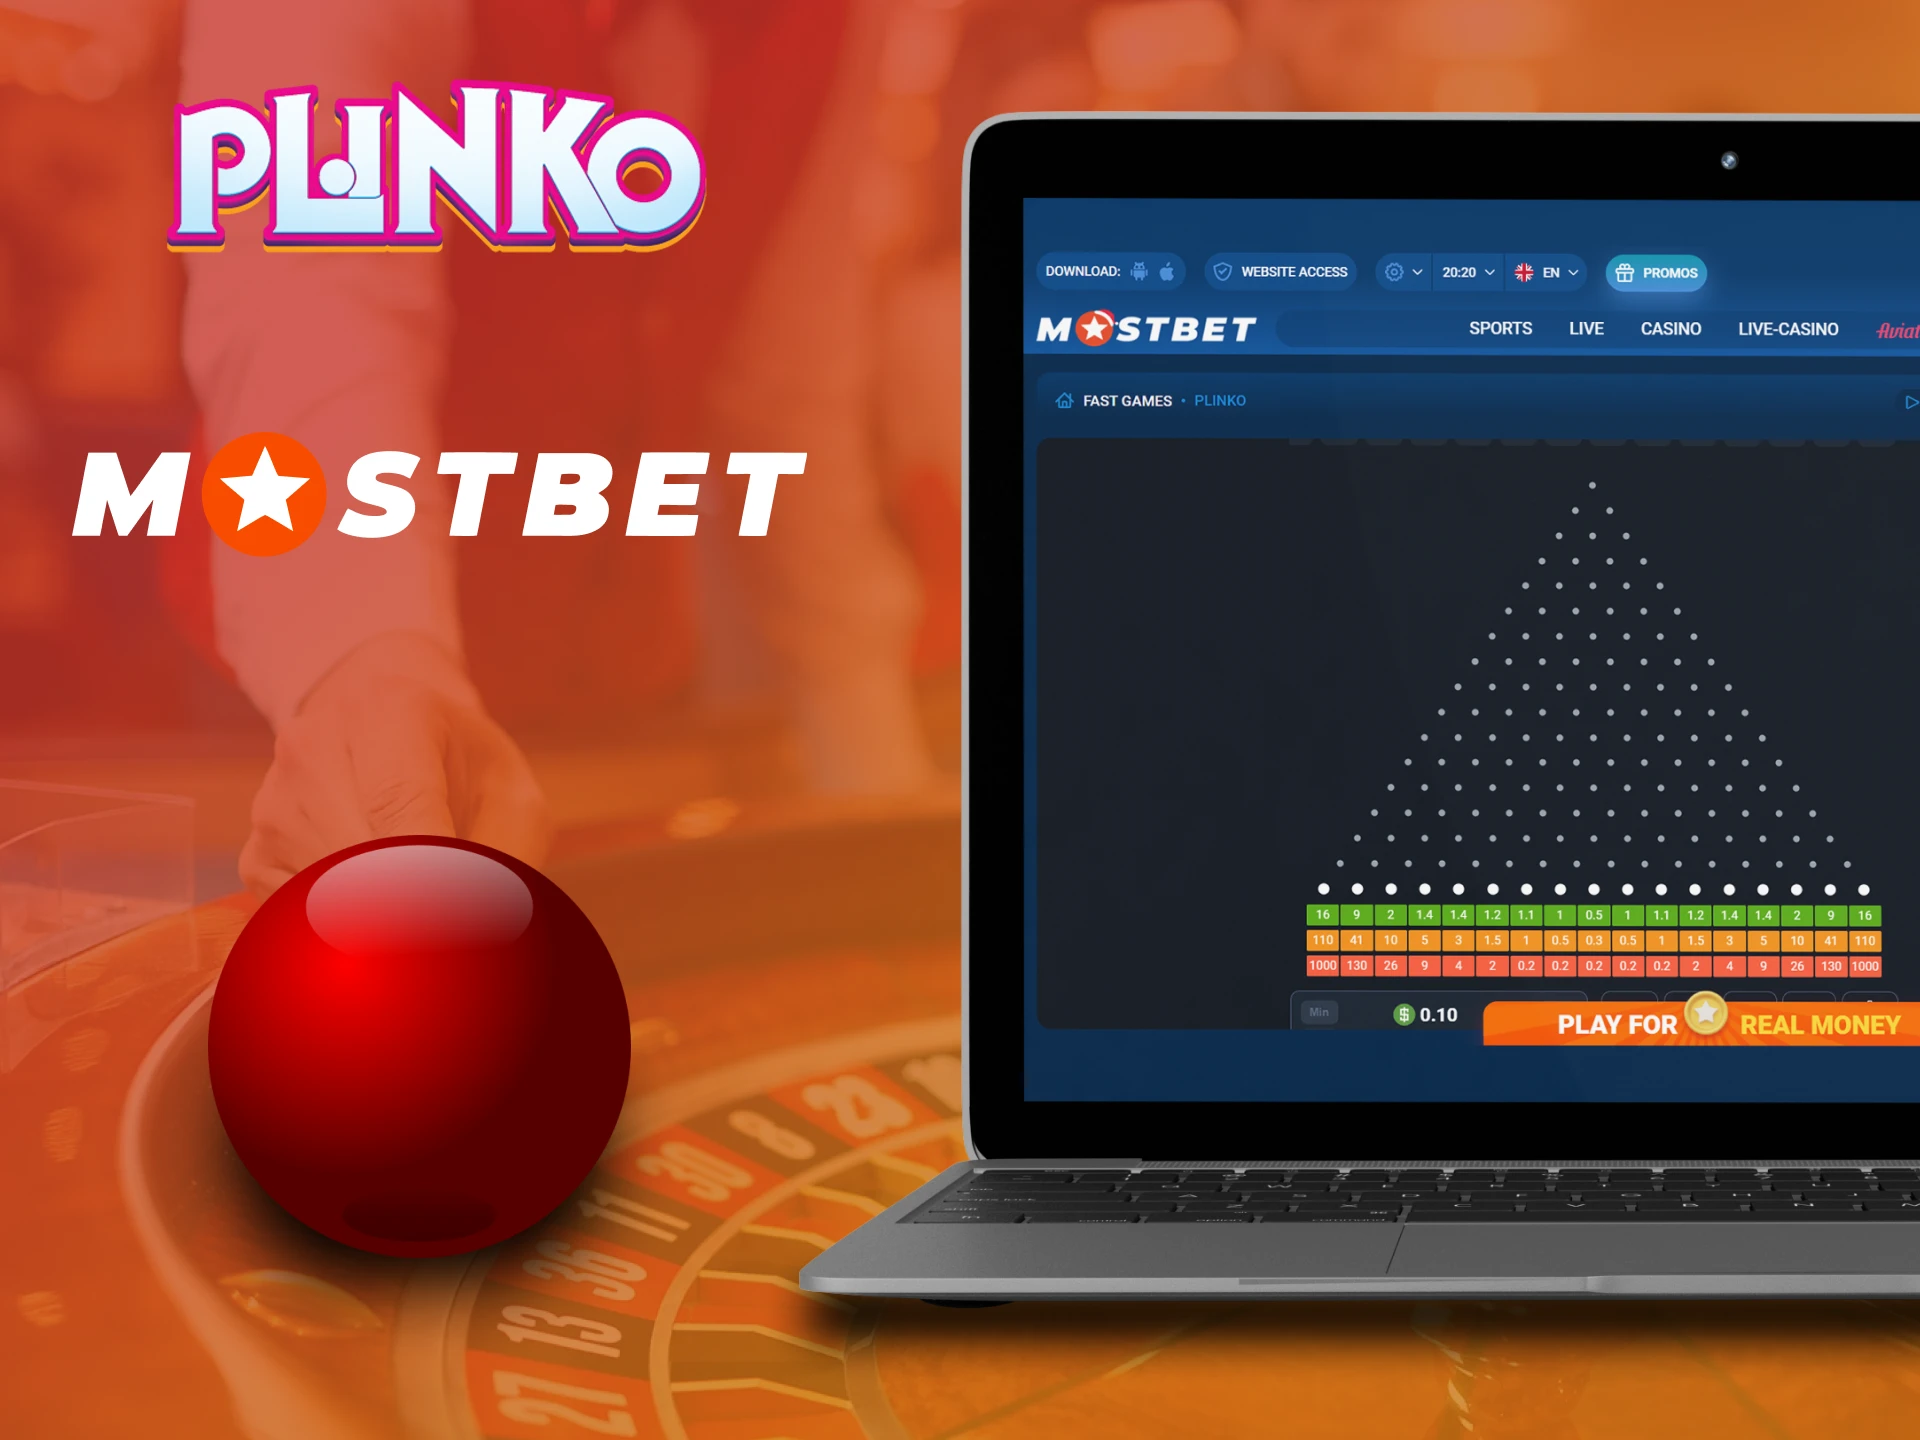 Play Plinko on the Mostbet website.